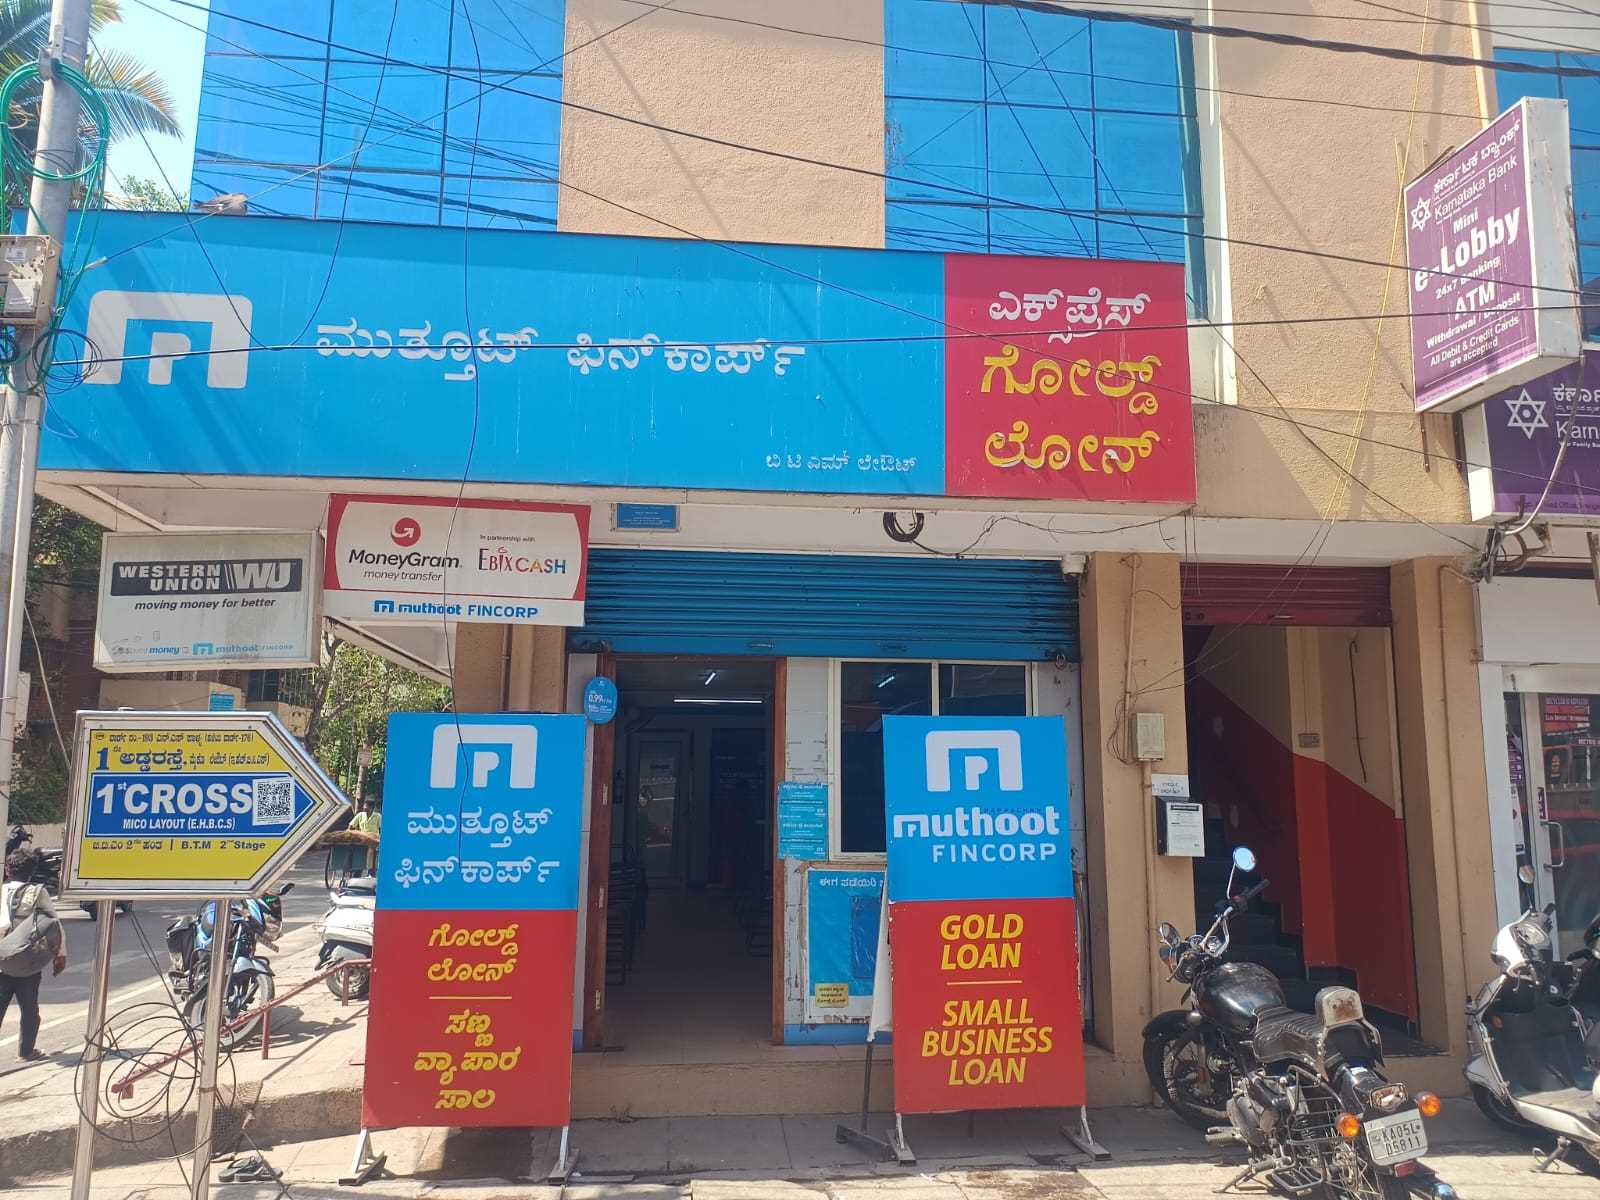 Muthoot Fincorp Gold Loan Services in BTM Layout, Bengaluru, Karnataka